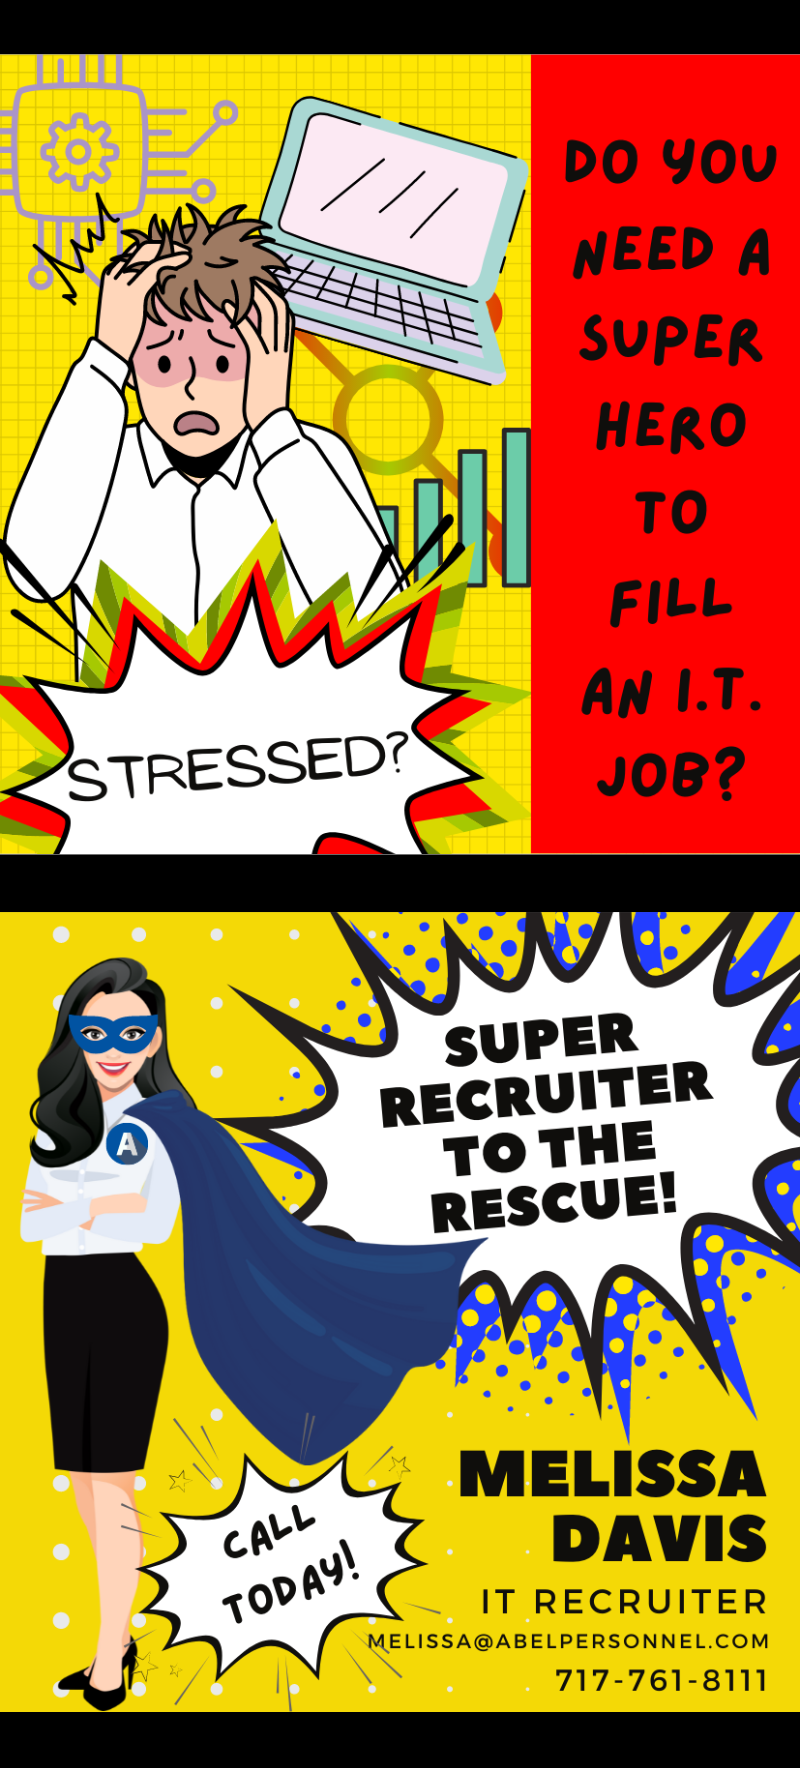 Super Recruiter for IT Jobs